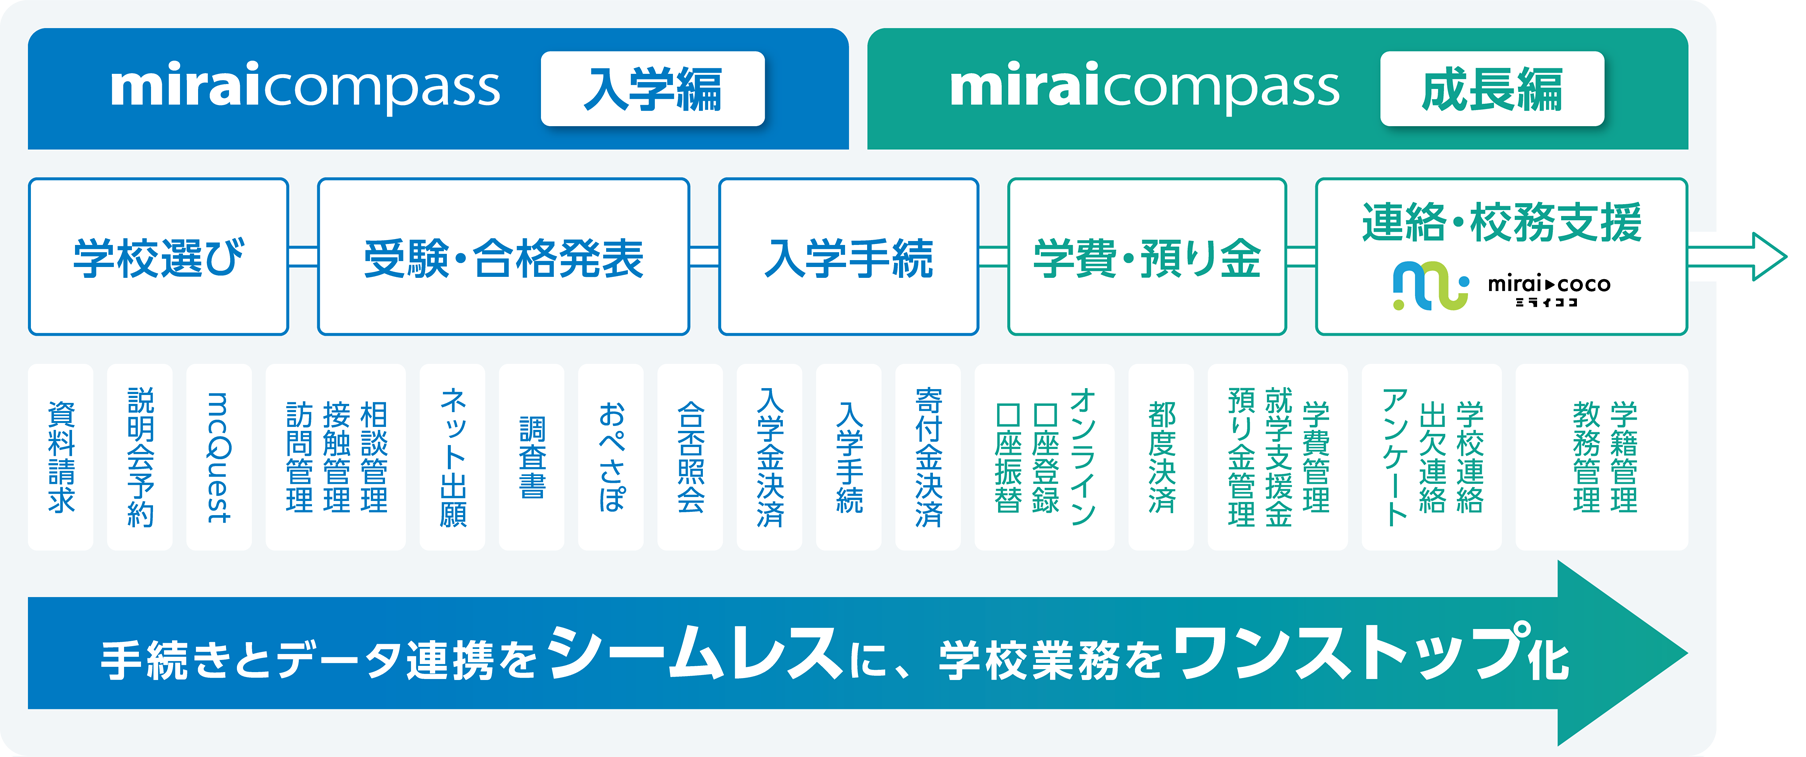 miraicompassシリーズ図